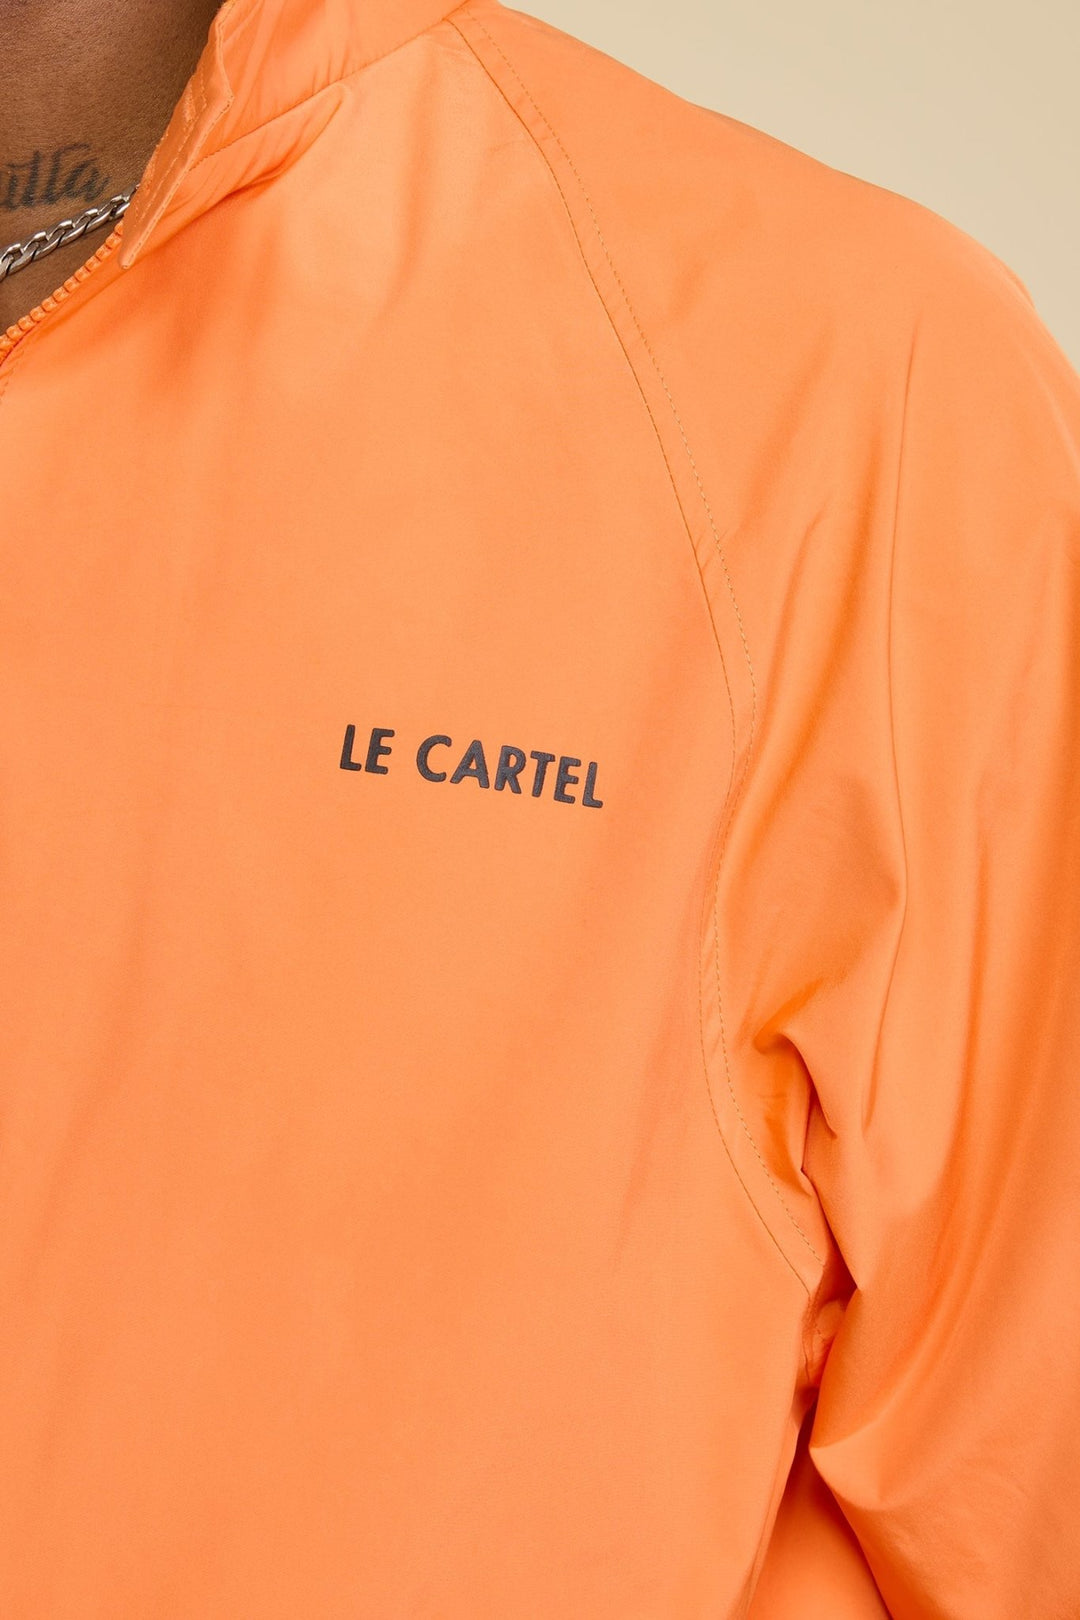 CHATCON・Veste harrington unisexe・Orange - Le Cartel